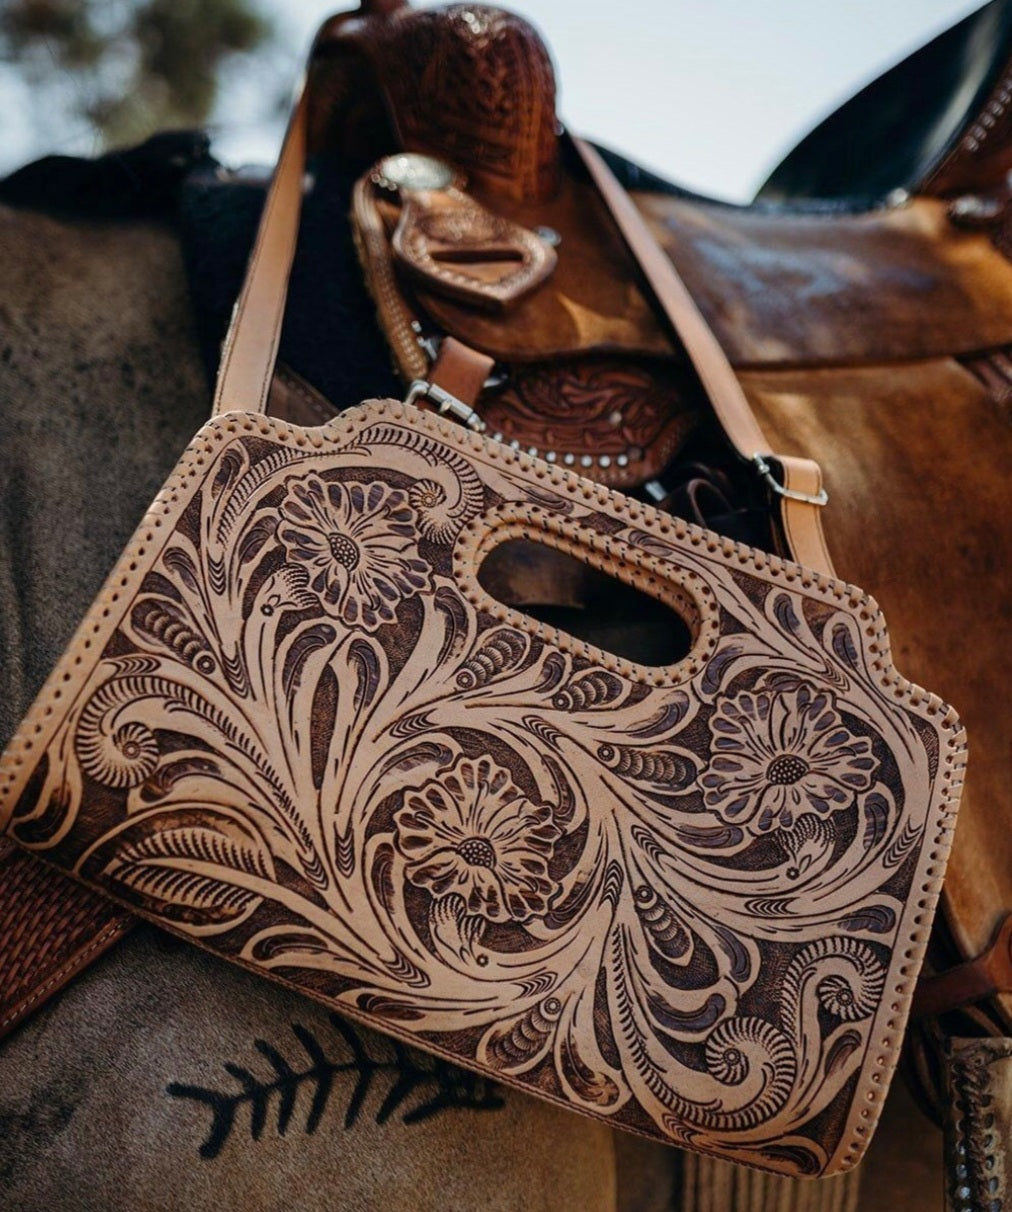 Zip Purse Ladies Leather Wallet Long Card Holder Clutch Handbag | Fruugo KR